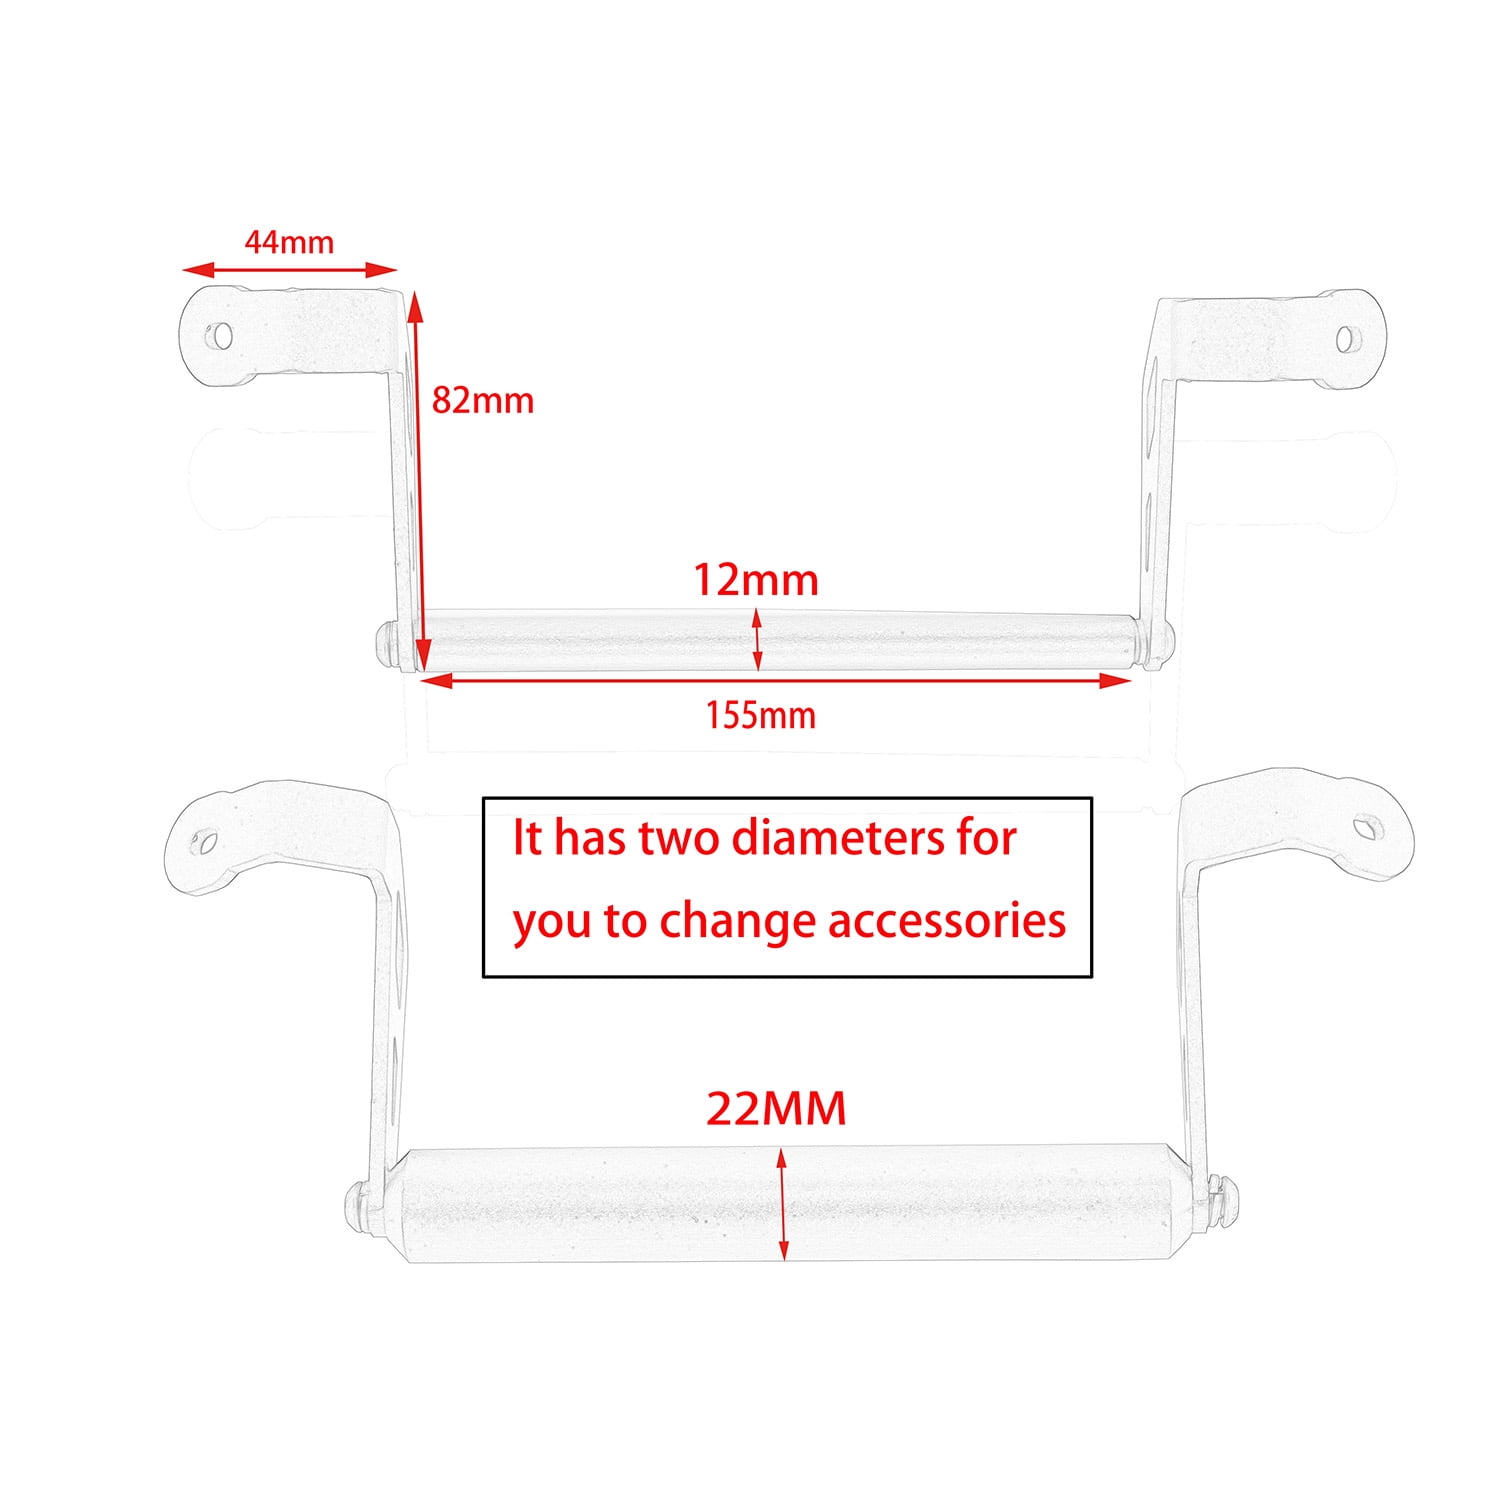 KKmoon 12MM/22MM Navigation Bracket Mounting Adapter Bracket Fitment for Multistrada Enduro 1200S 950 1200 2015-2017 